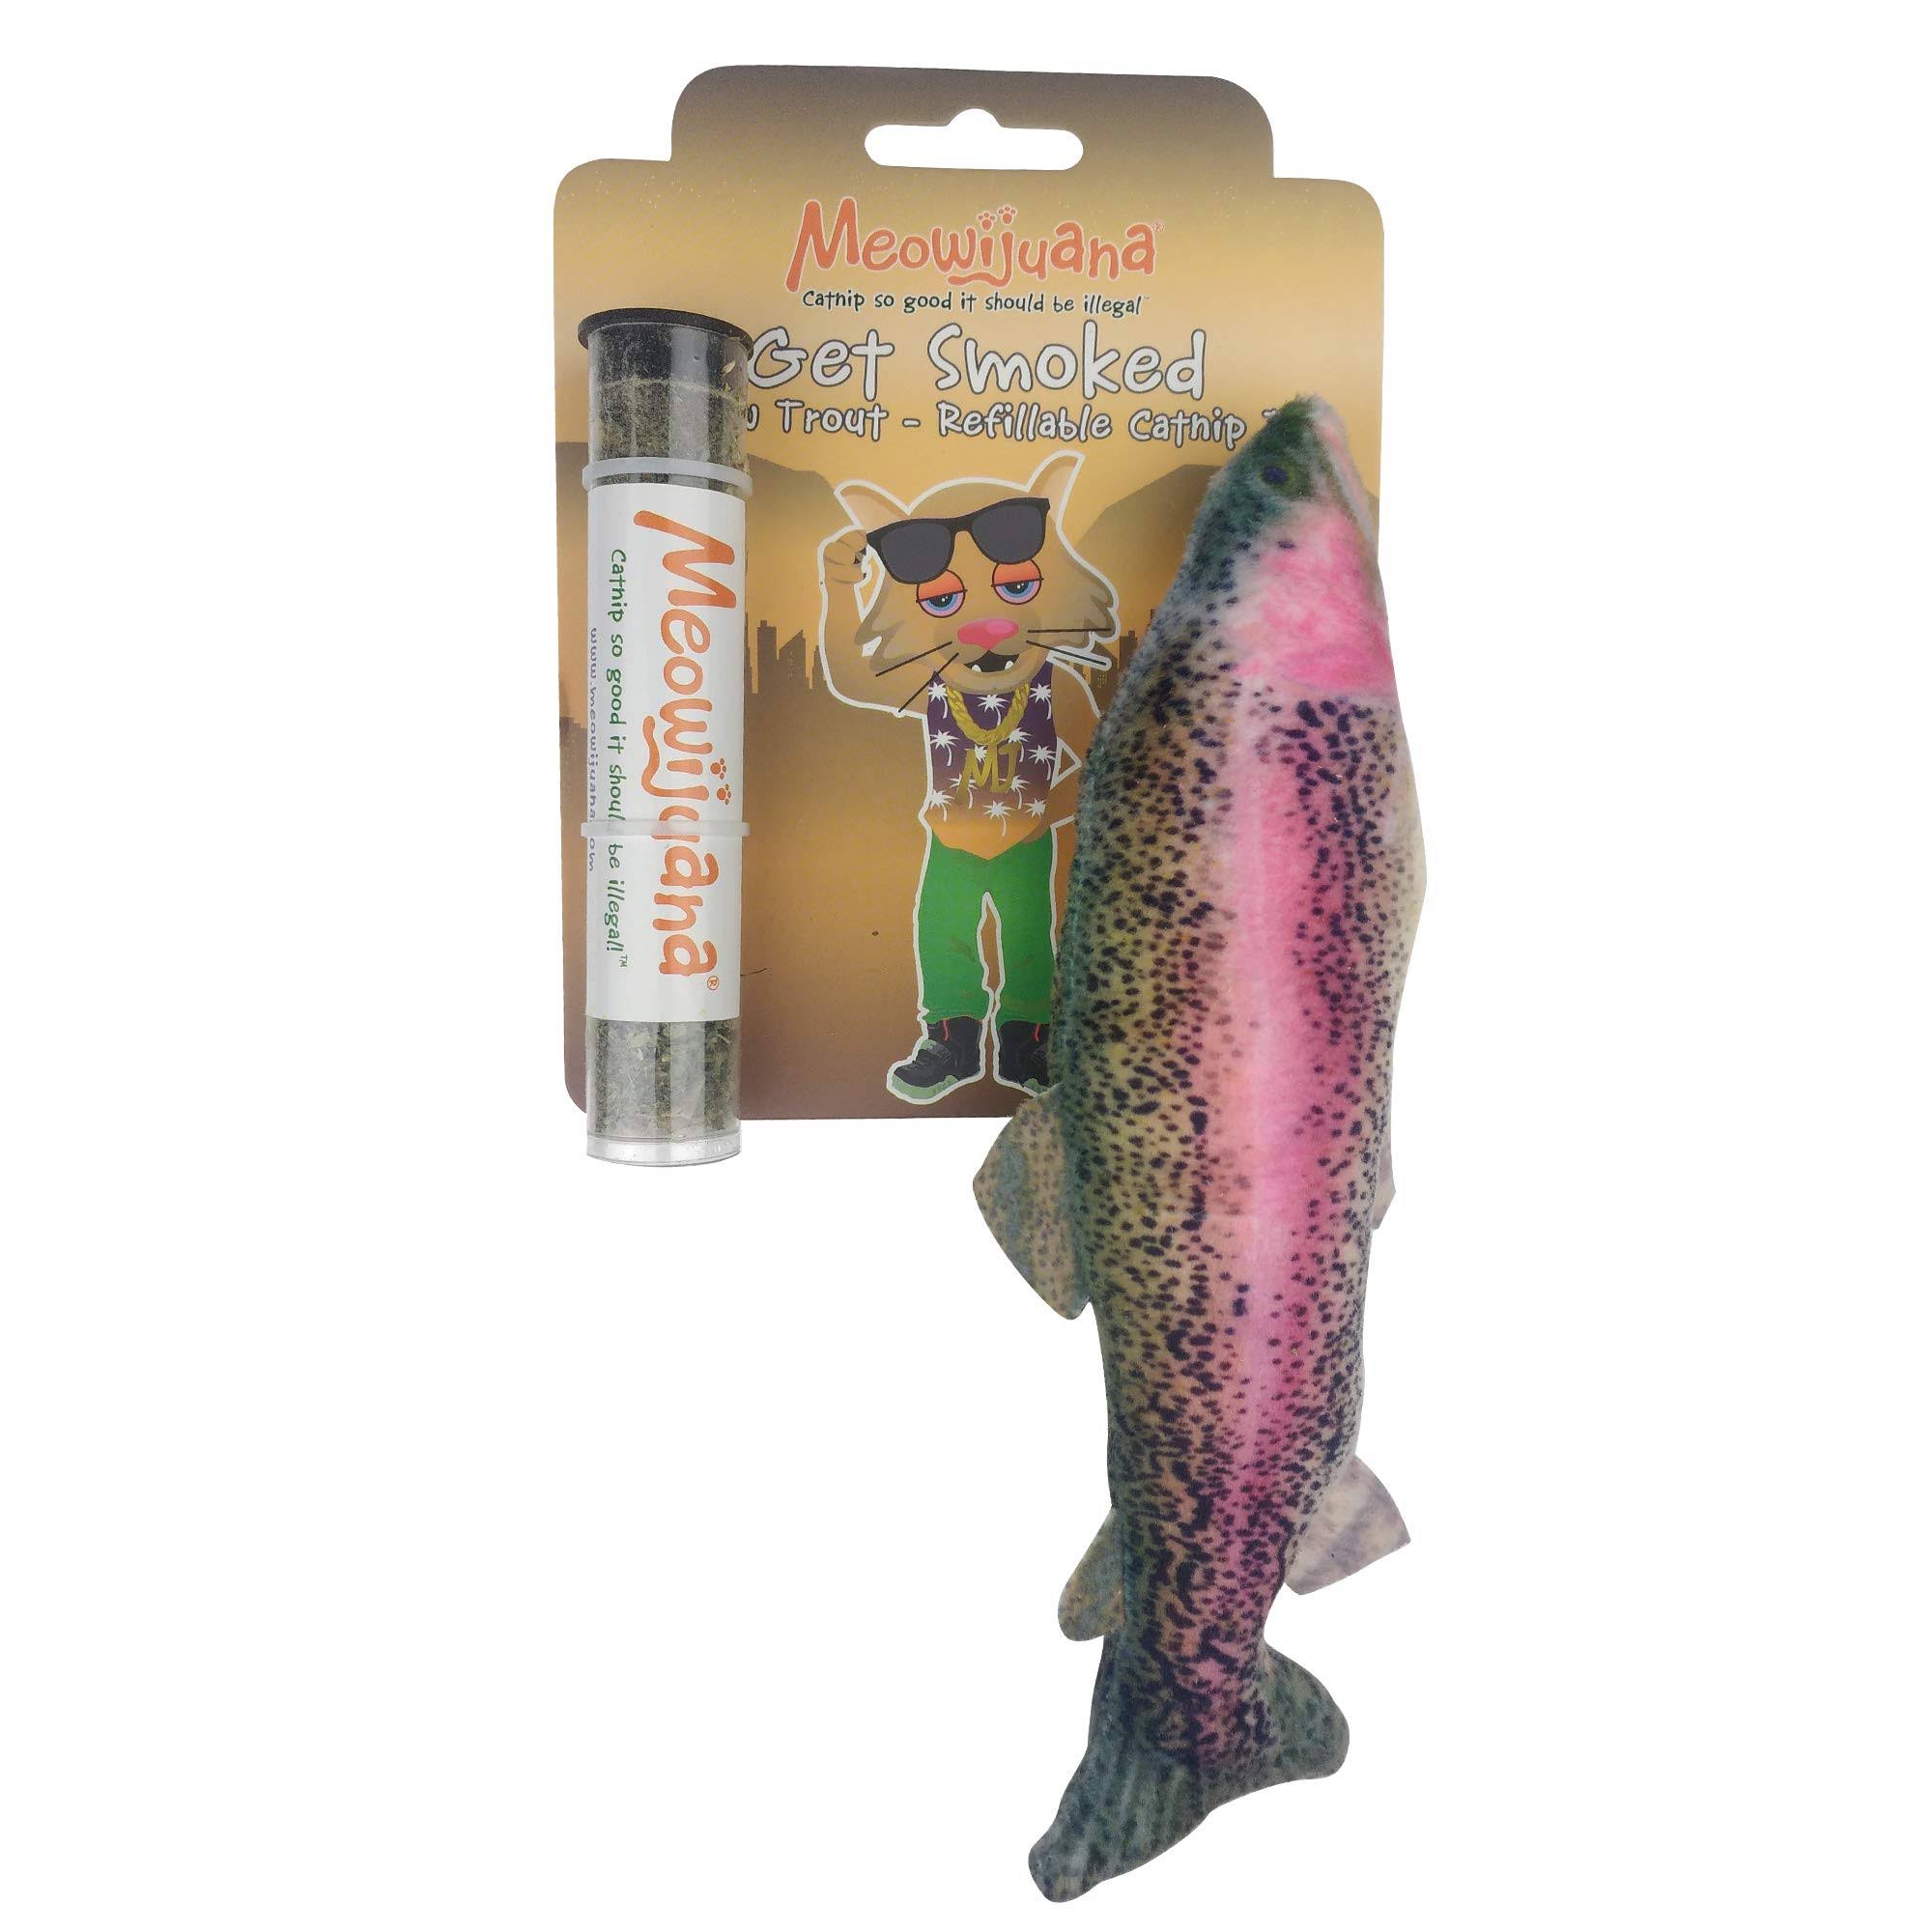 Get Smoked Refillable Catnip Fish Toy by Meowijuana